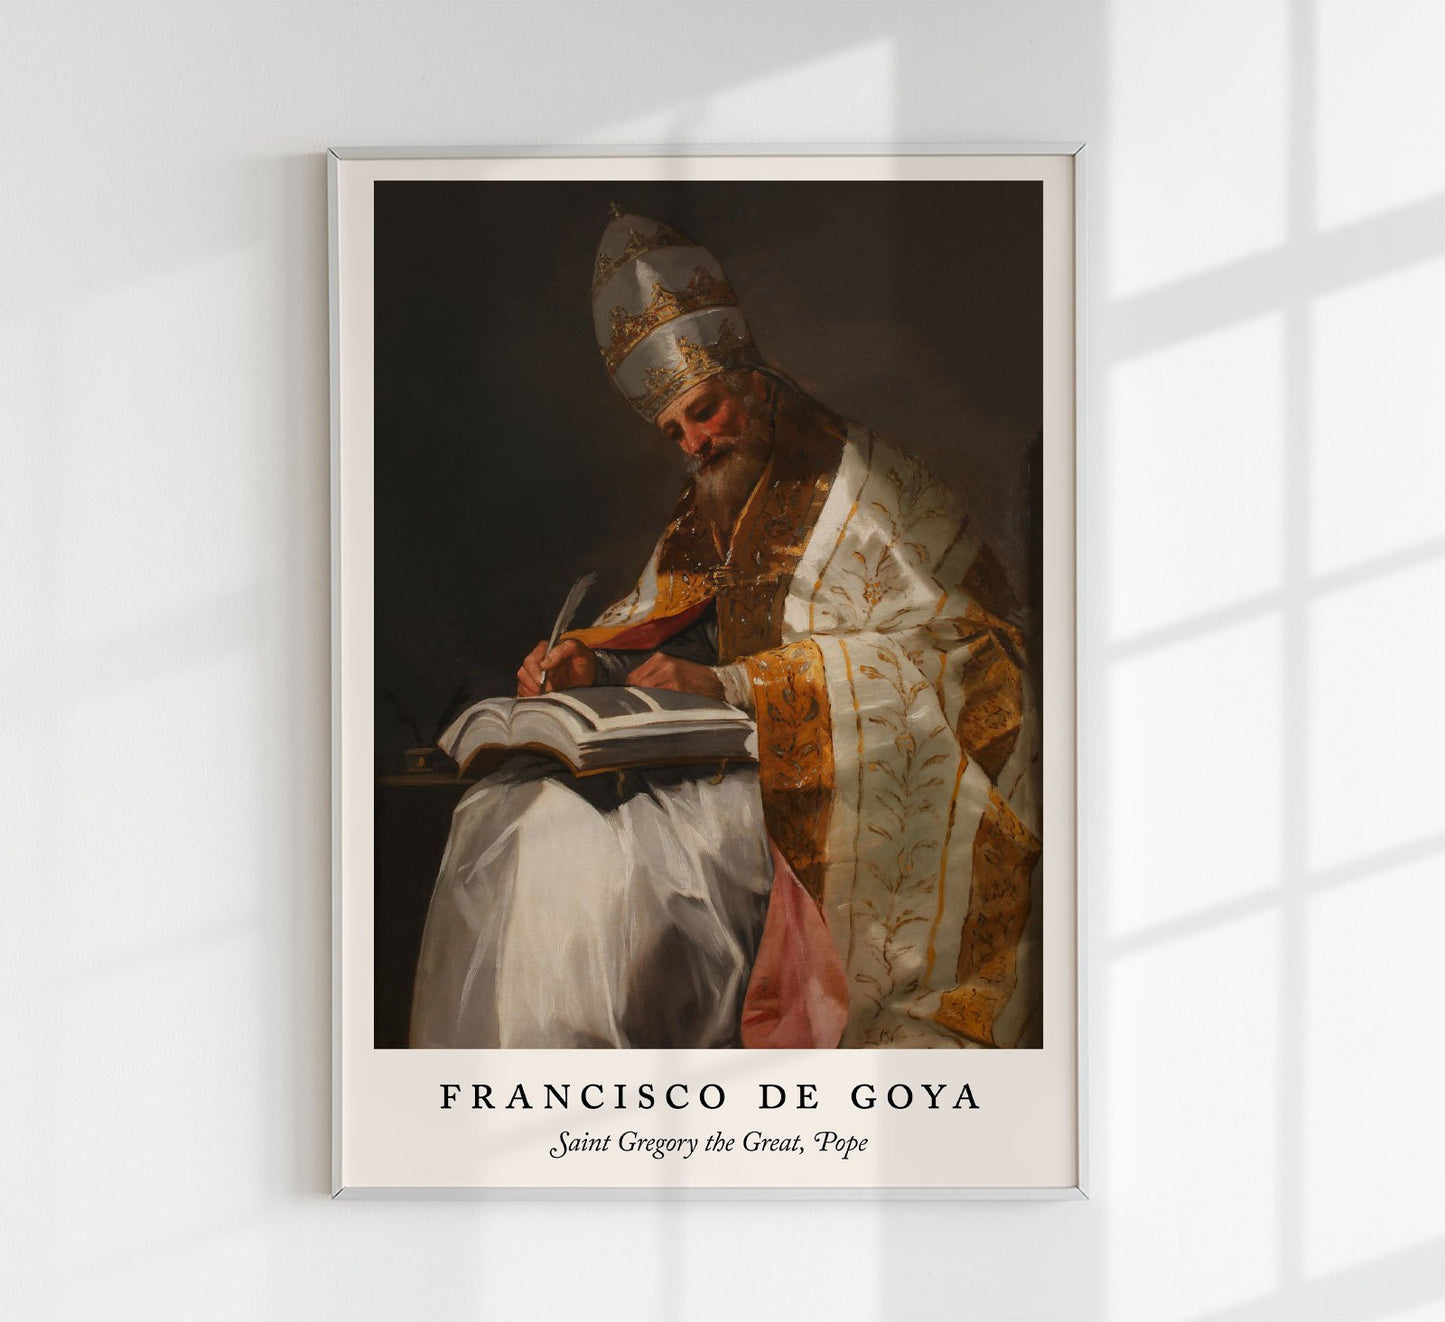 Saint Gregory the Great, Pope by Francisco de Goya